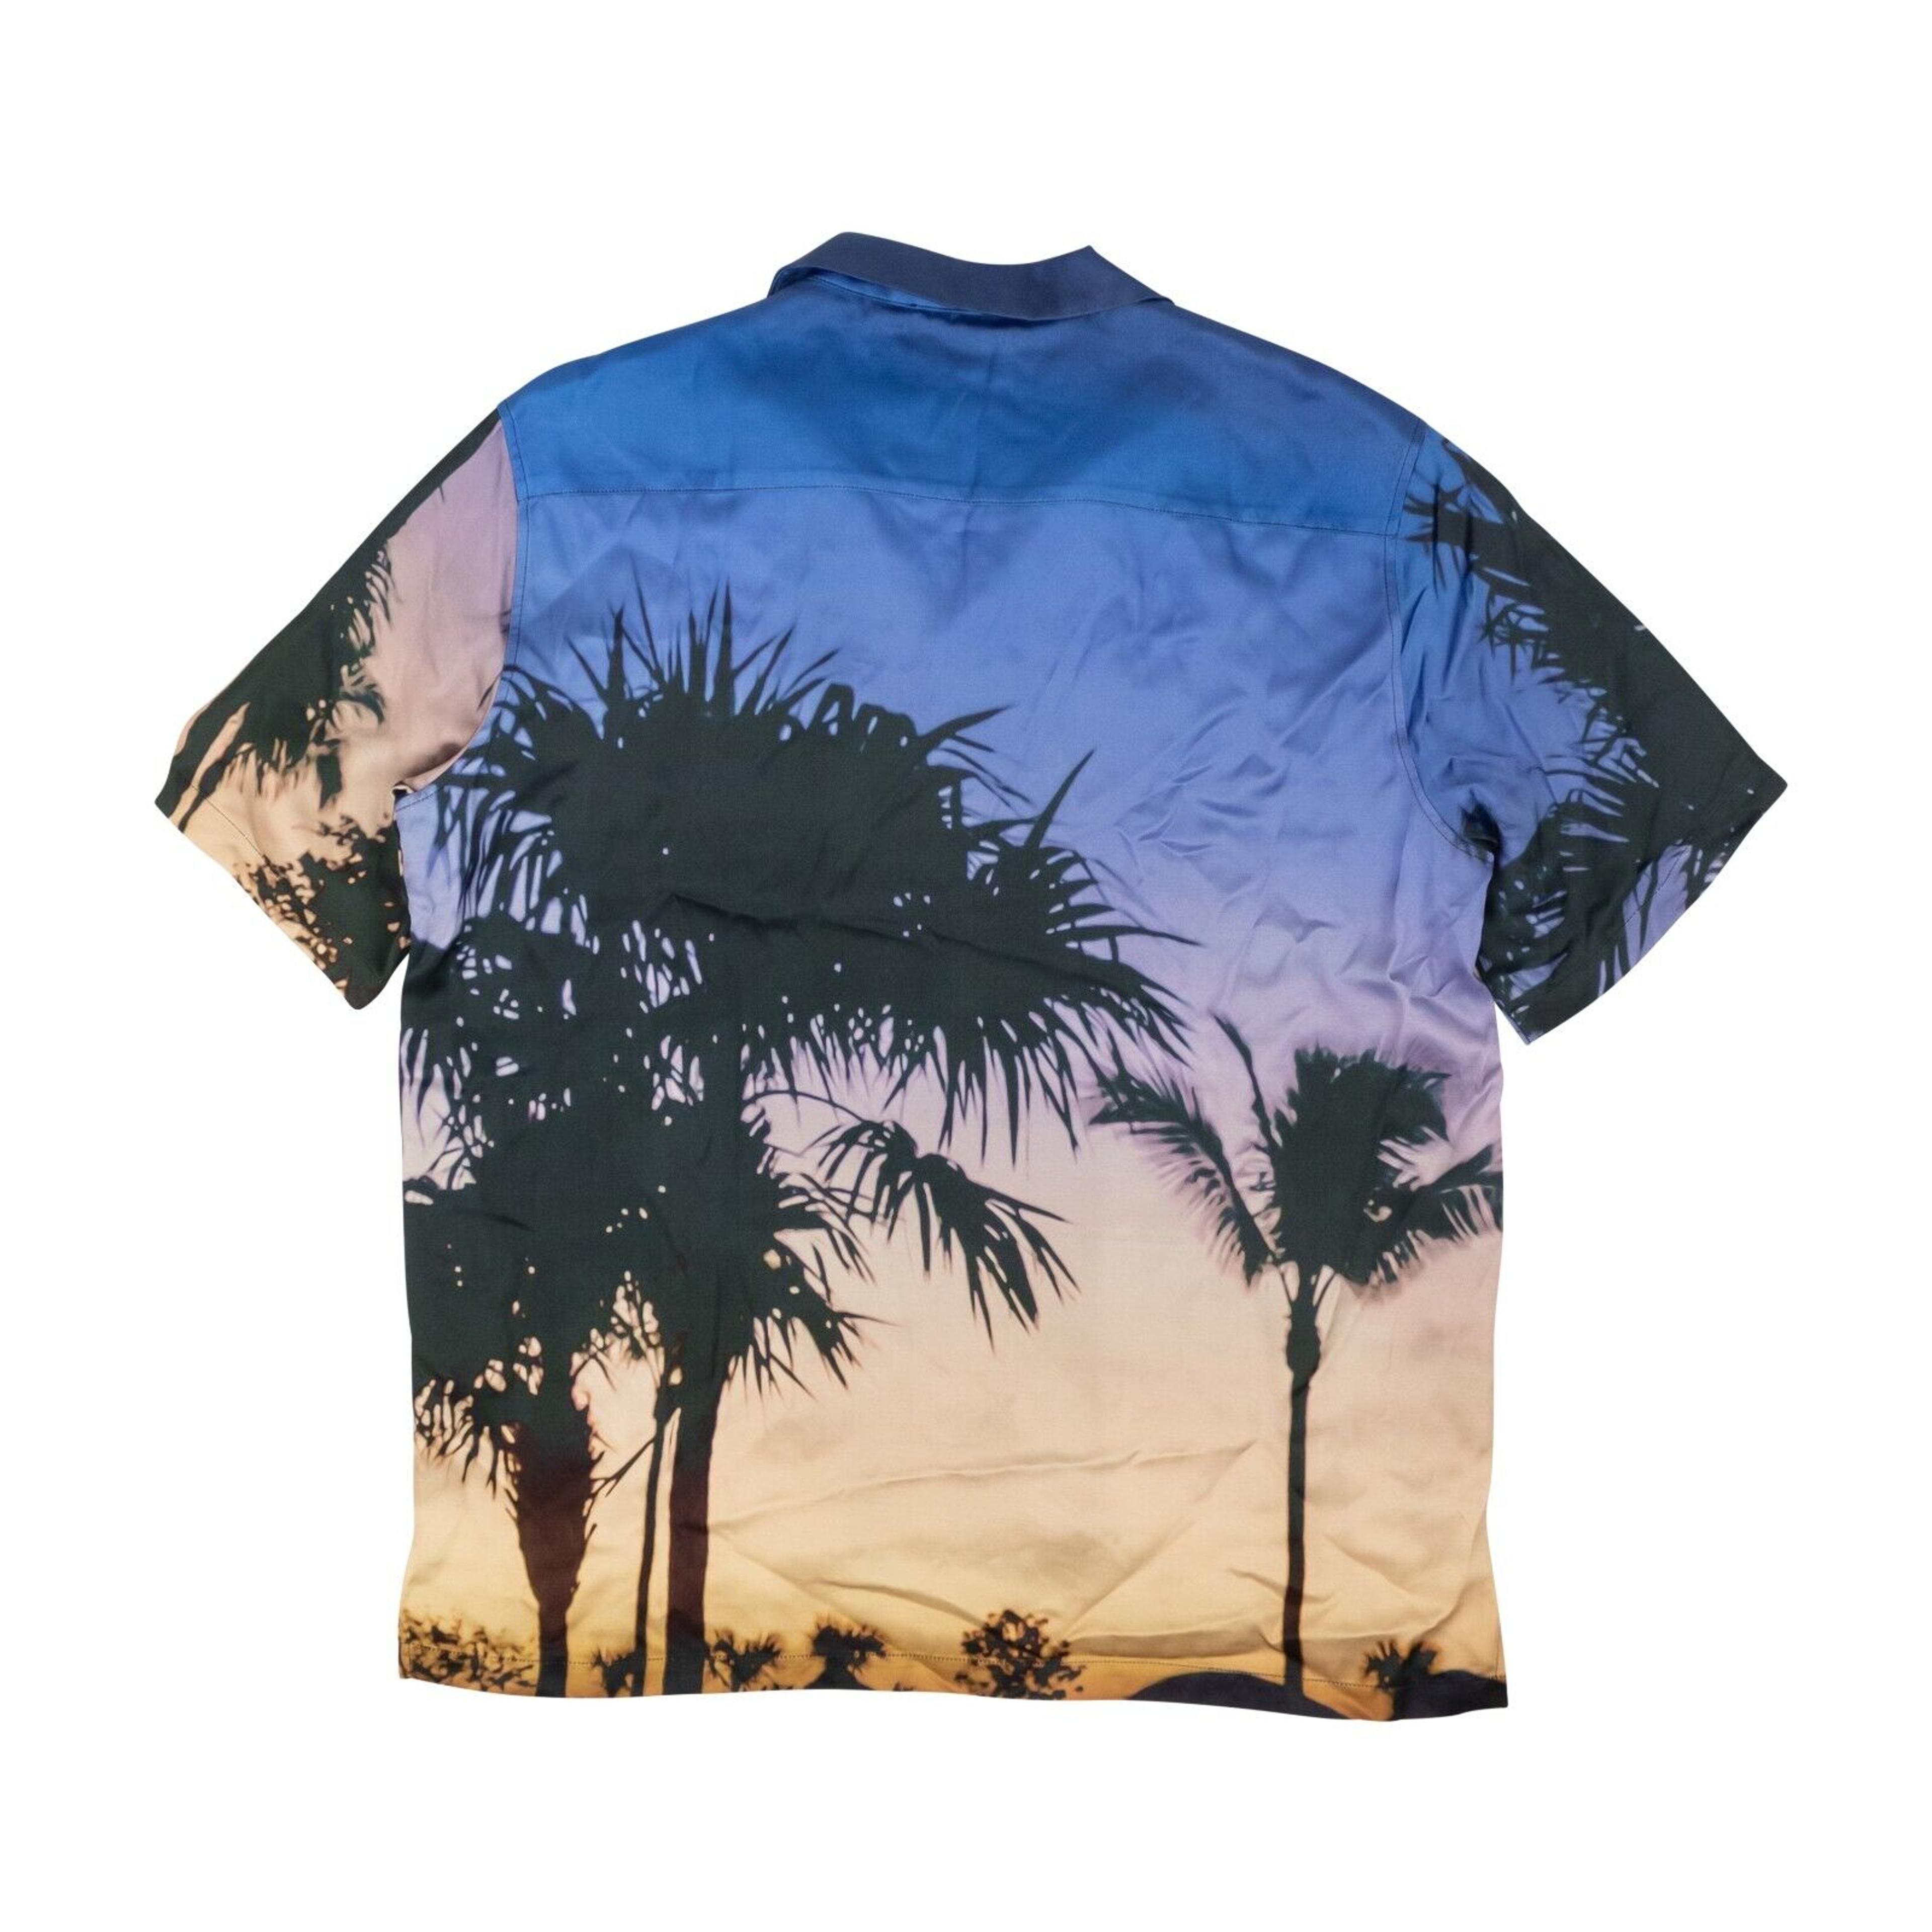 Alternate View 2 of Multicolor Ipanema Sunrise Print Shirt